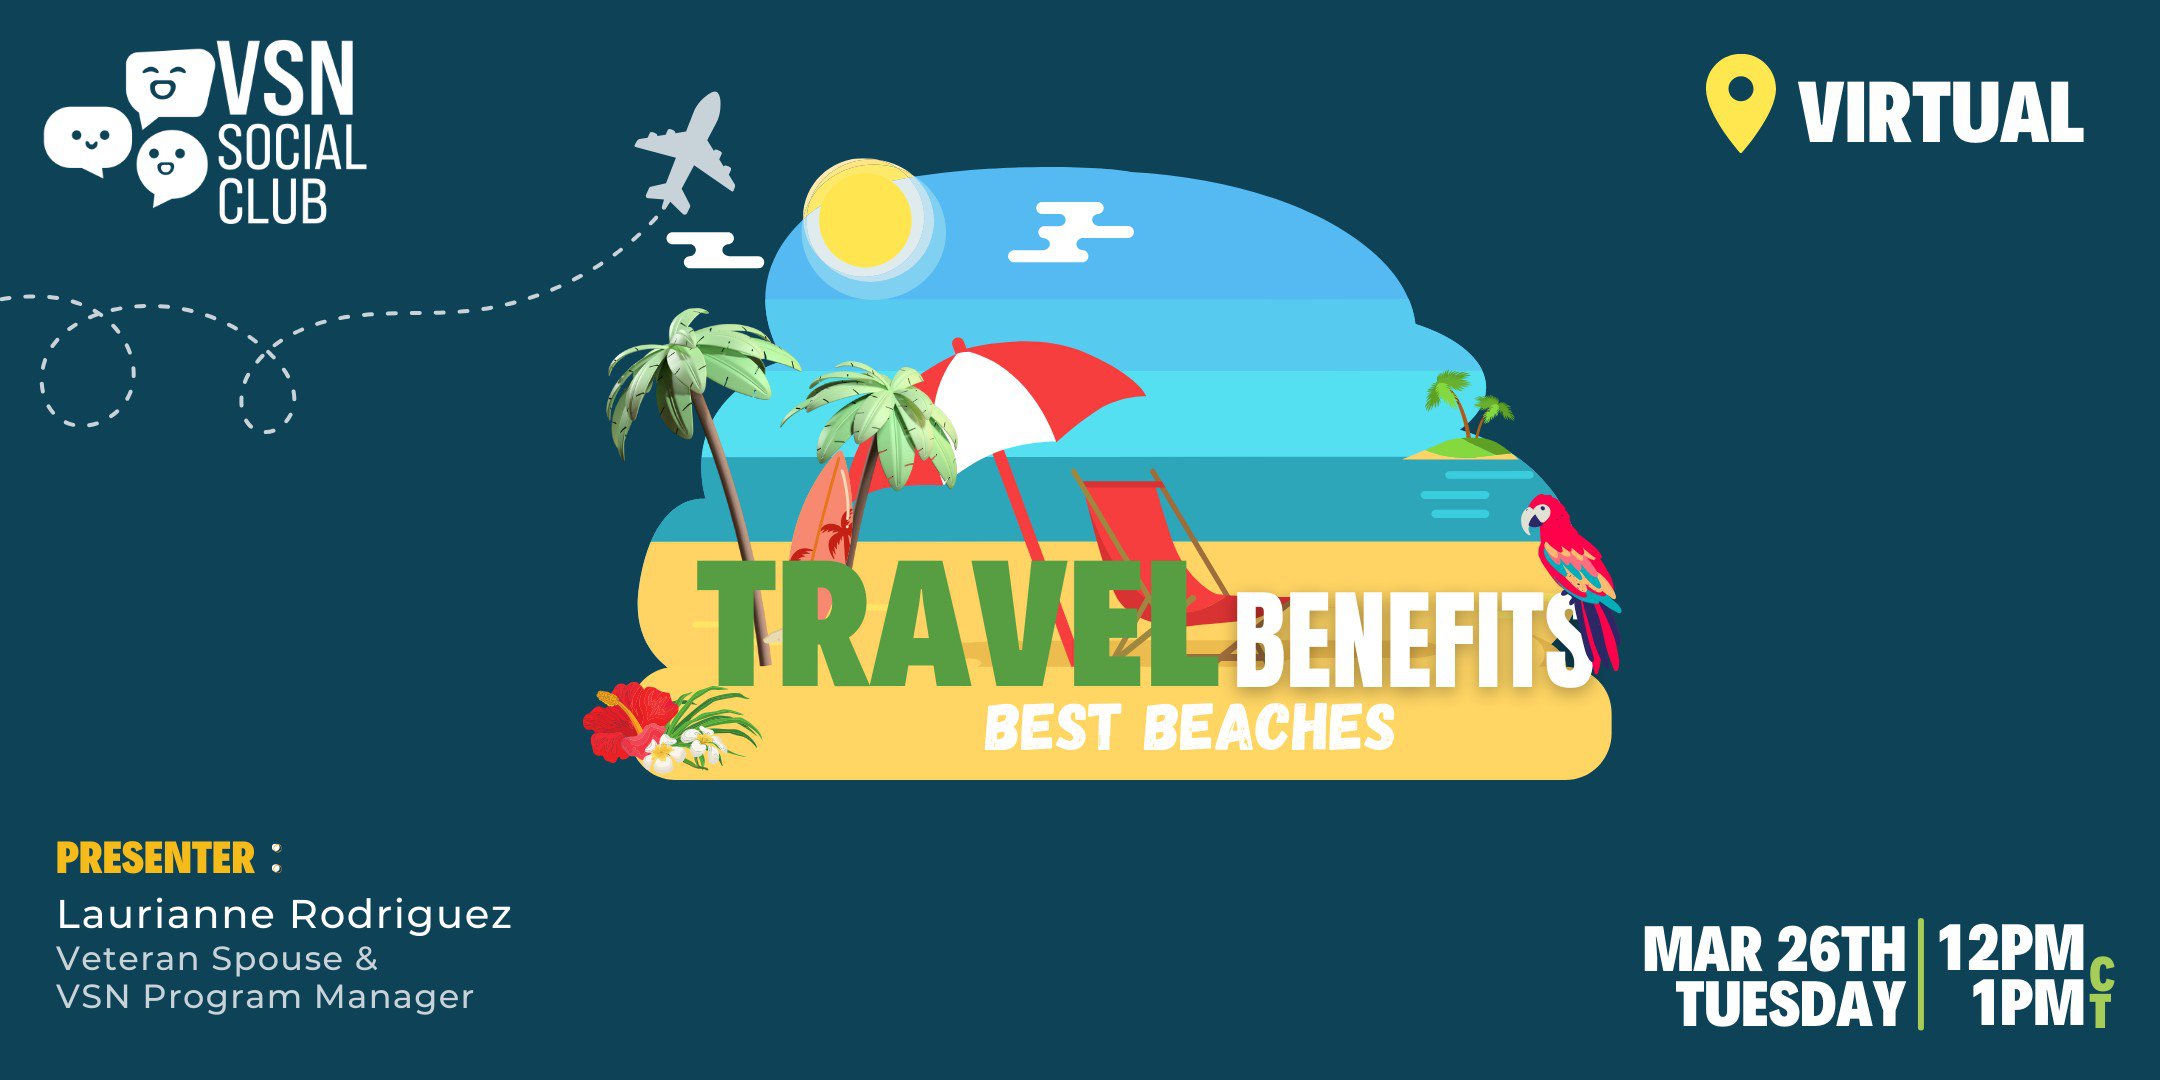 Travel benefits